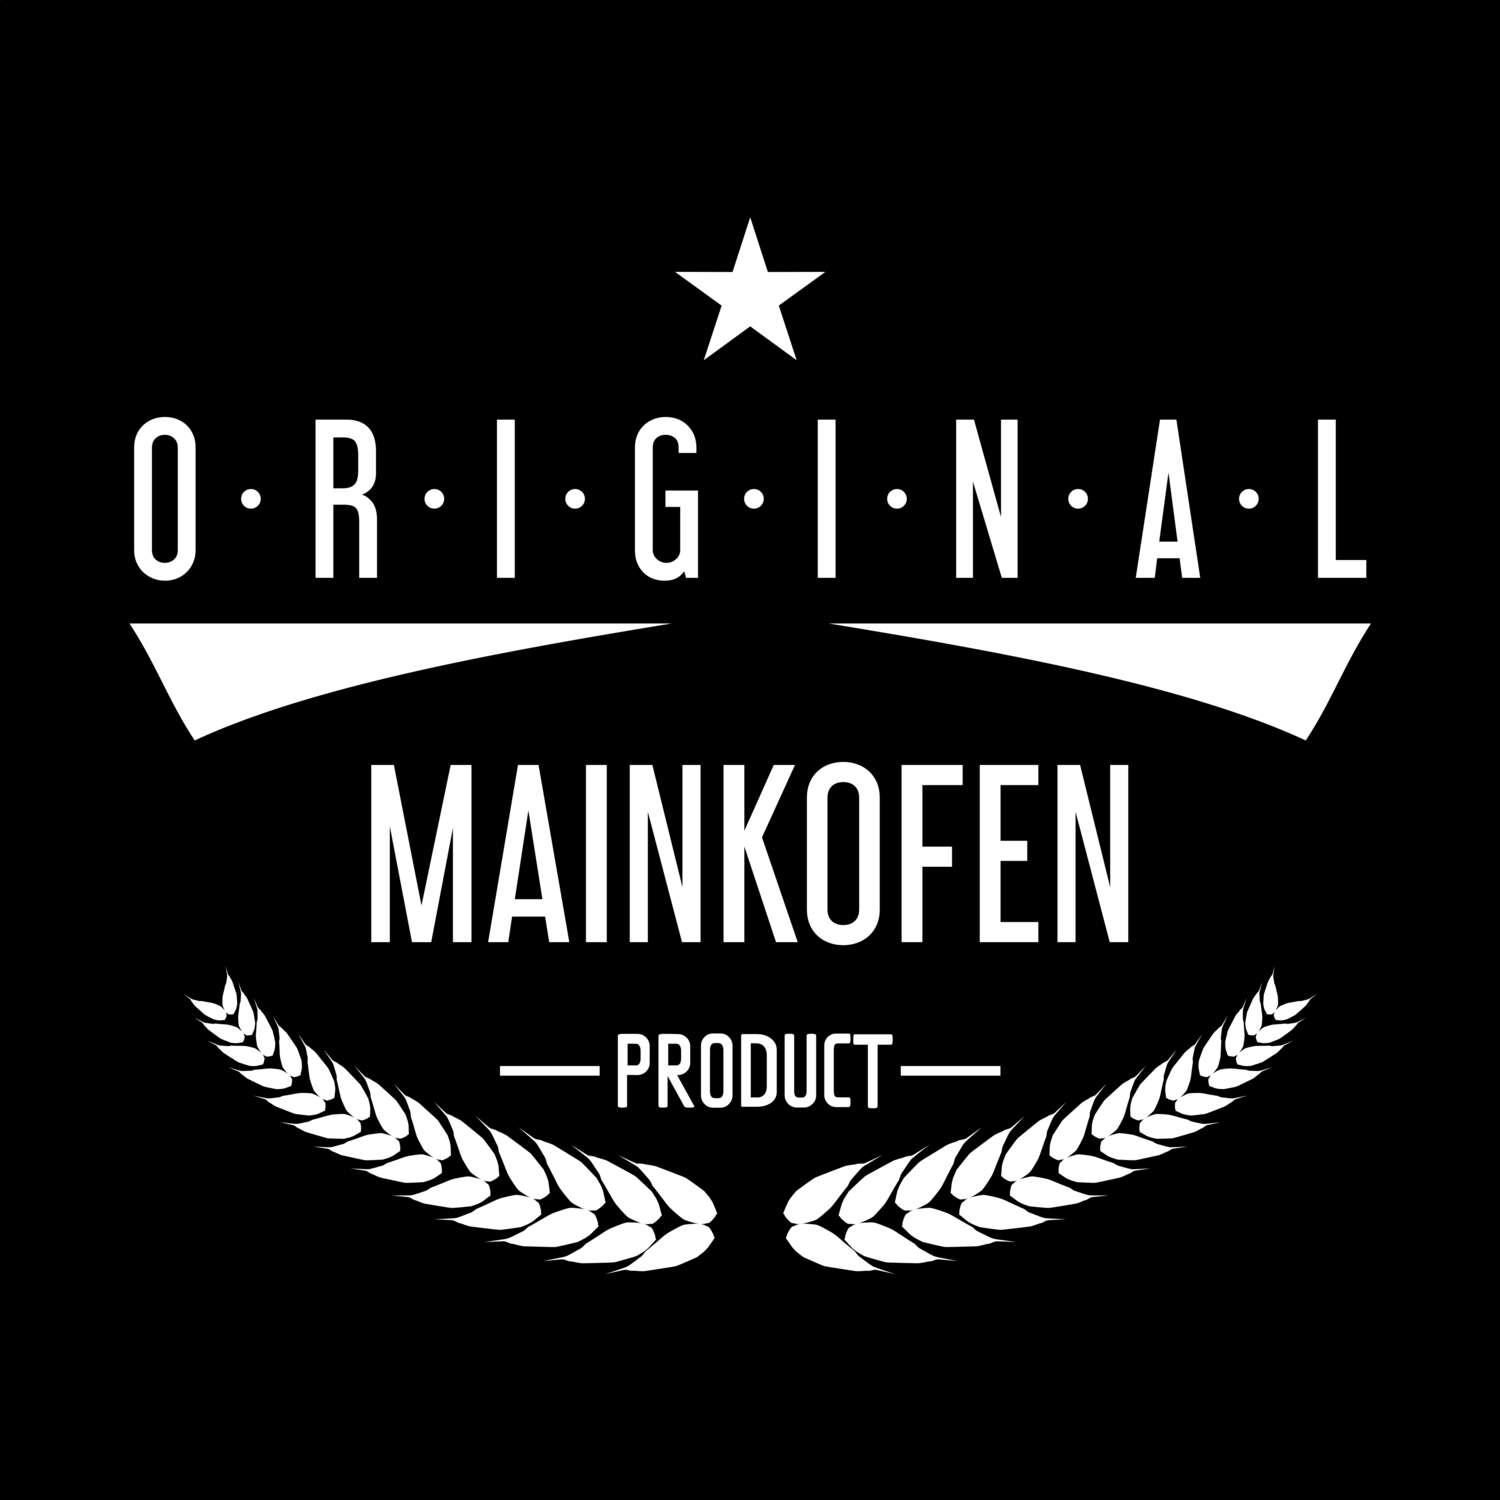 Mainkofen T-Shirt »Original Product«